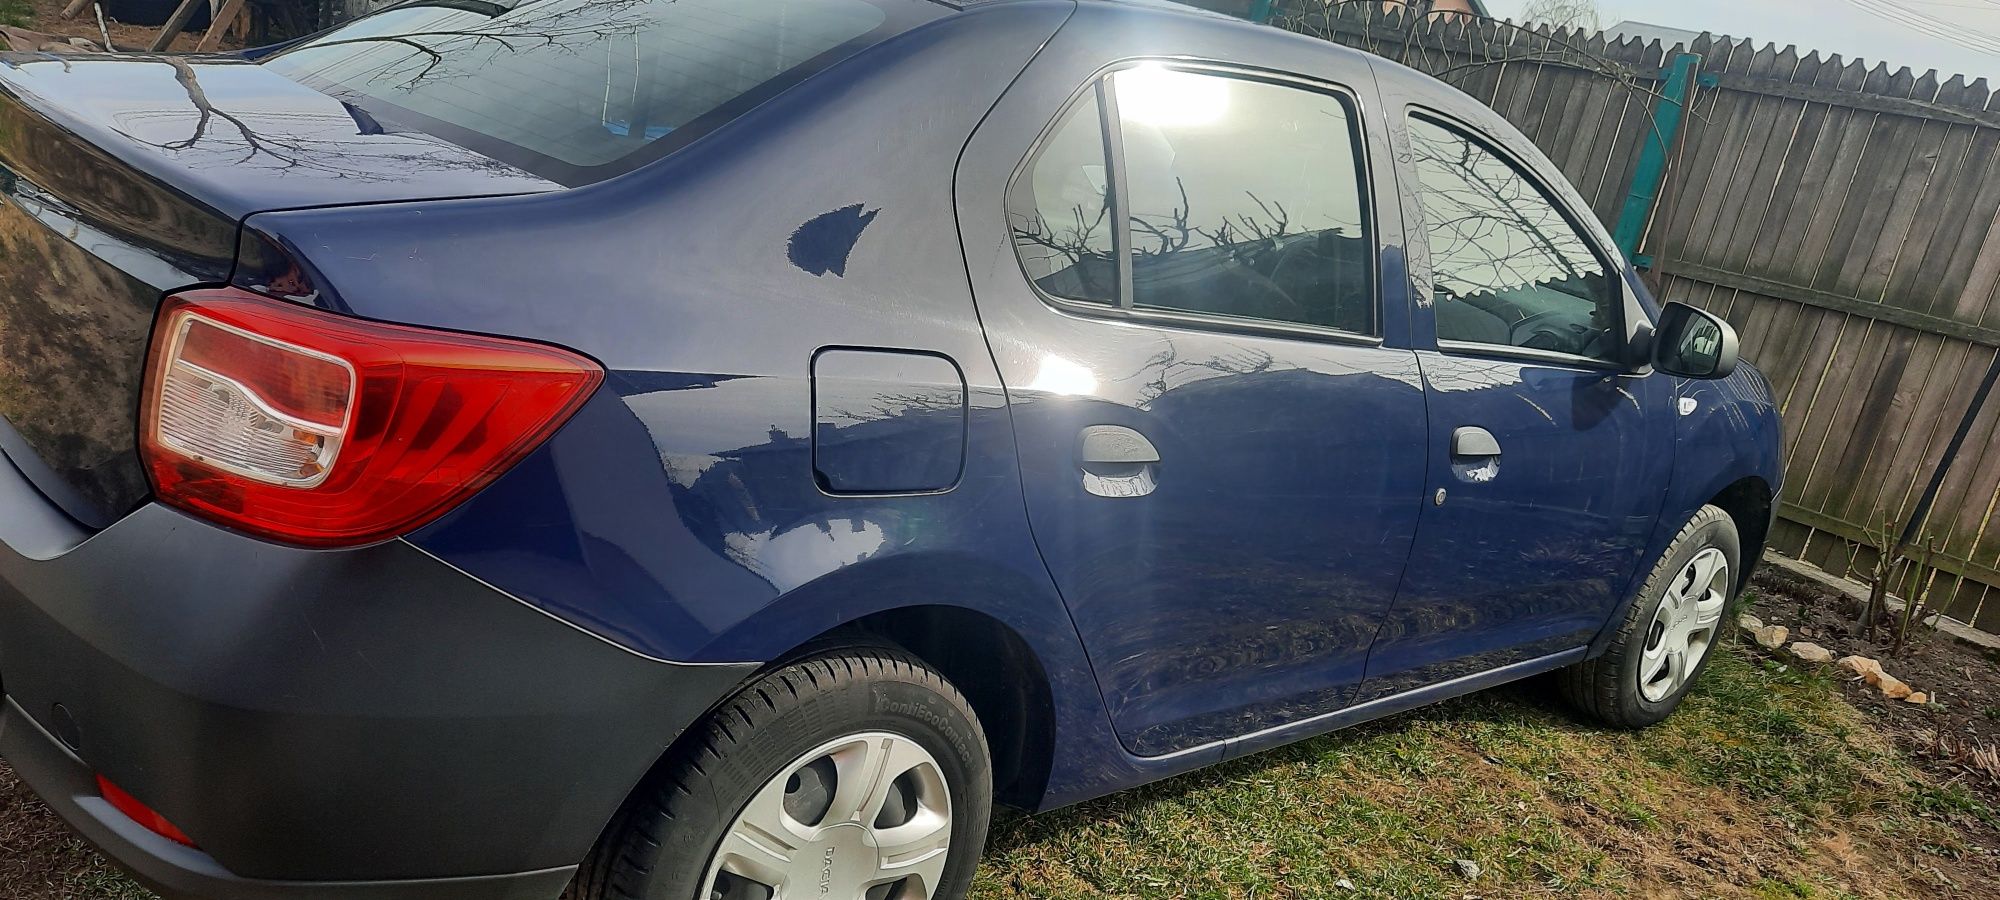 Dacia Logan 1.2 unic proprietar nou 24285 km servo ABS airbag fiscal